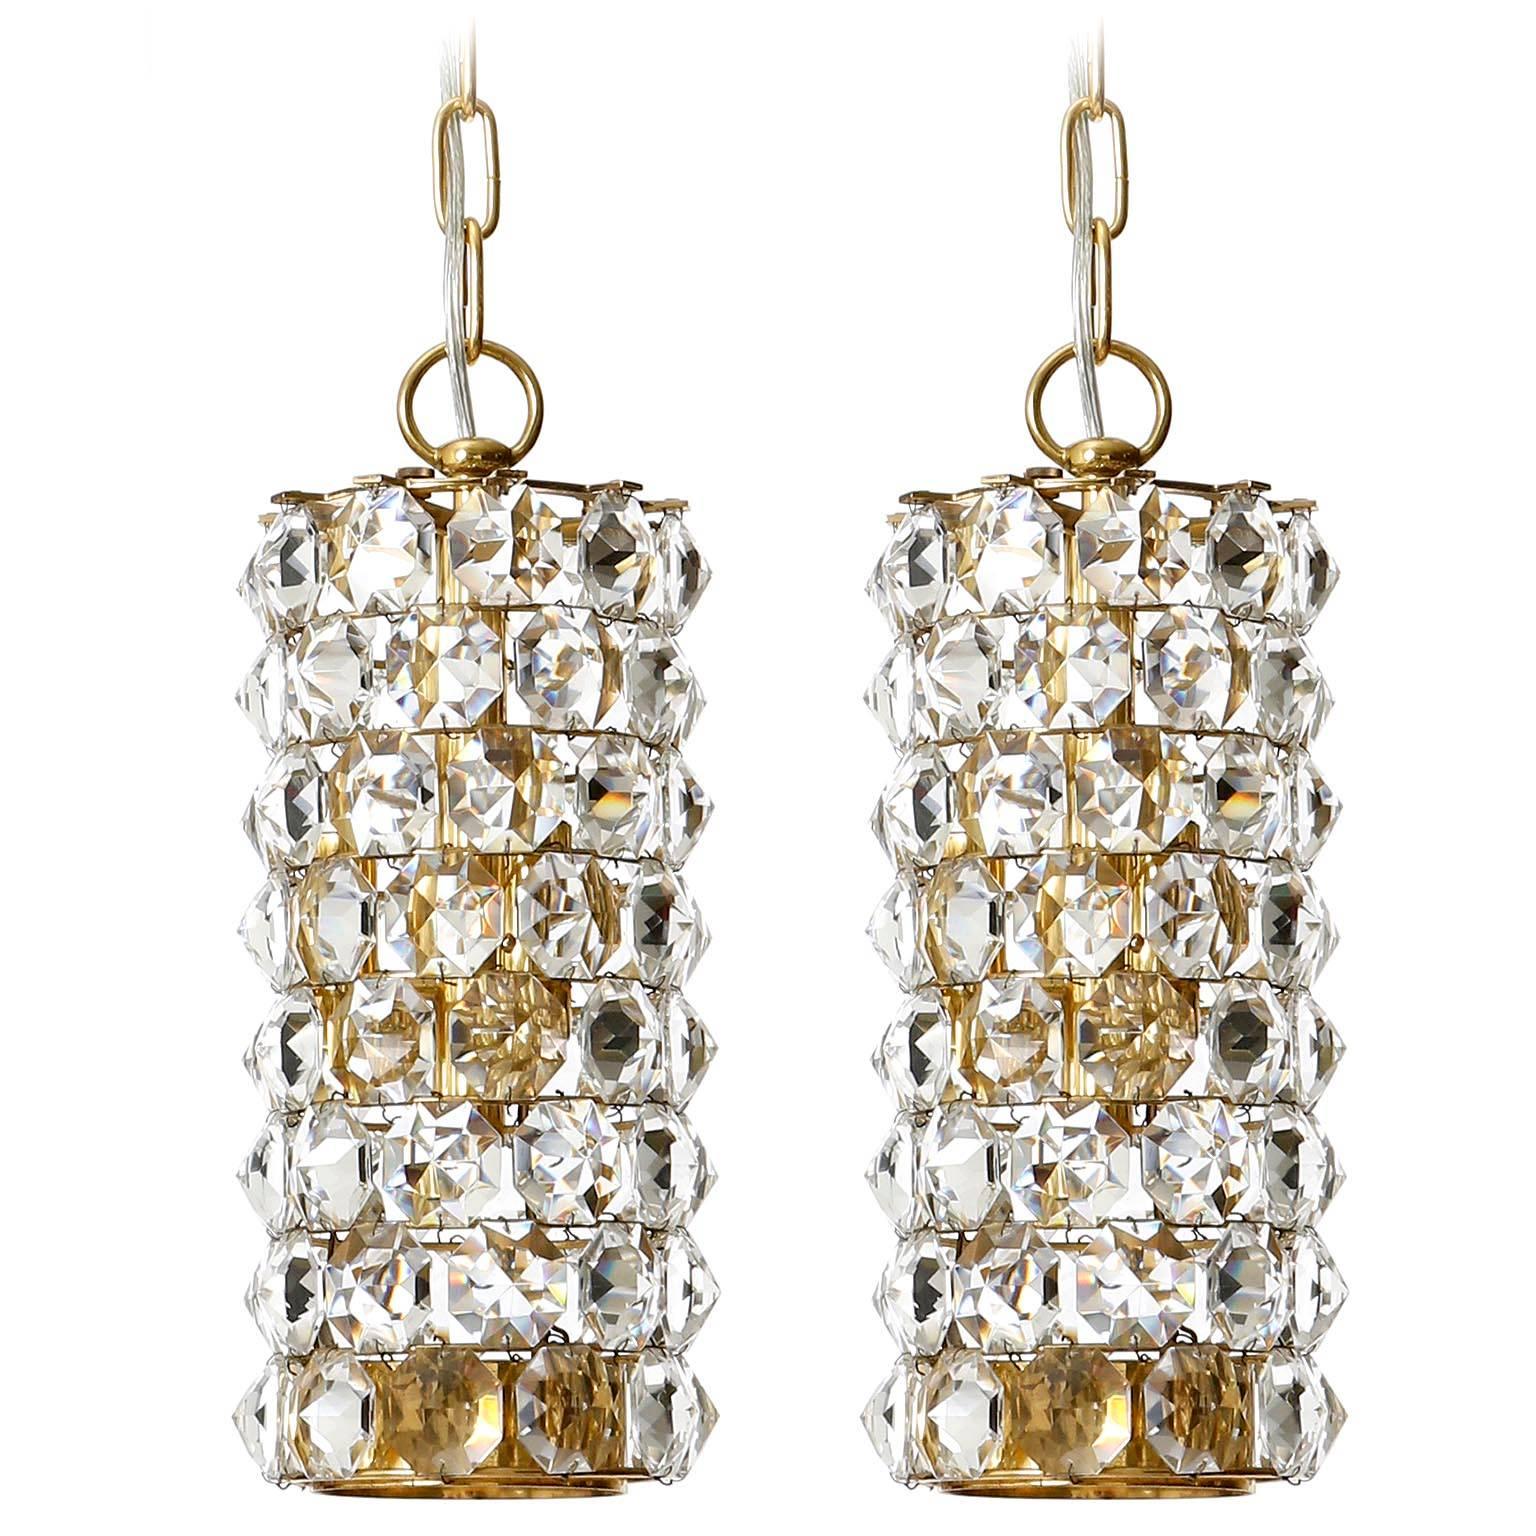 Pair of J.L. Lobmeyr Pendant Lights Lanterns, Brass Crystal Glass, 1960s